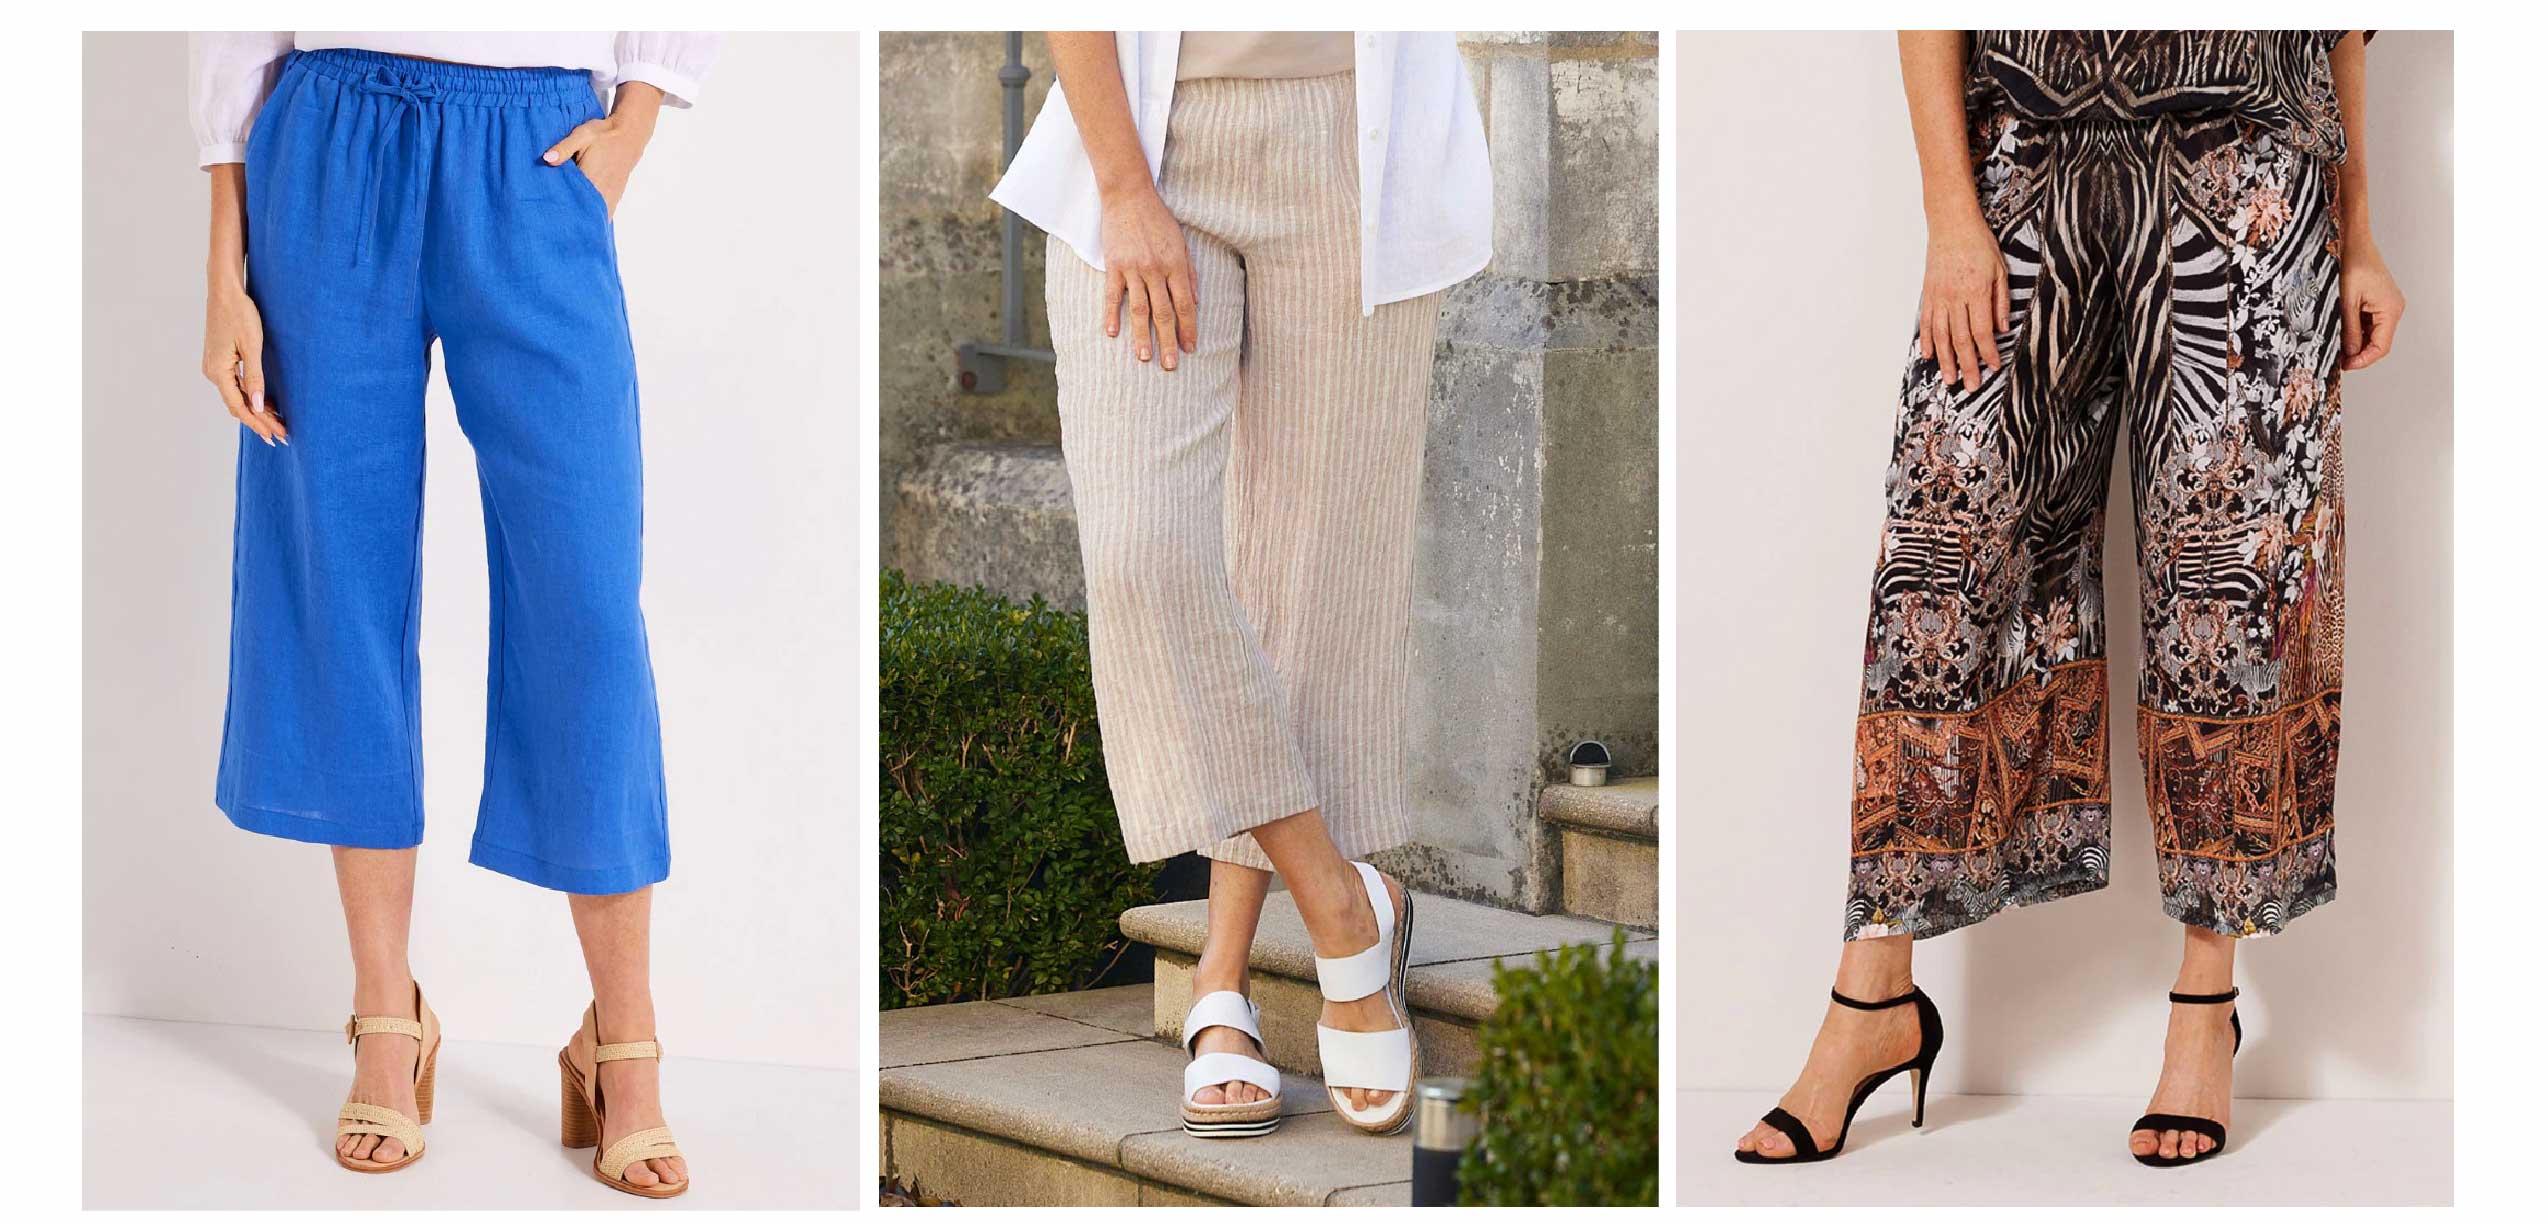 The Summer Style Guide: Linen Pants Outfit - Merrick's Art | Linen pants  outfit, Linen pants outfit summer, Linen pants women